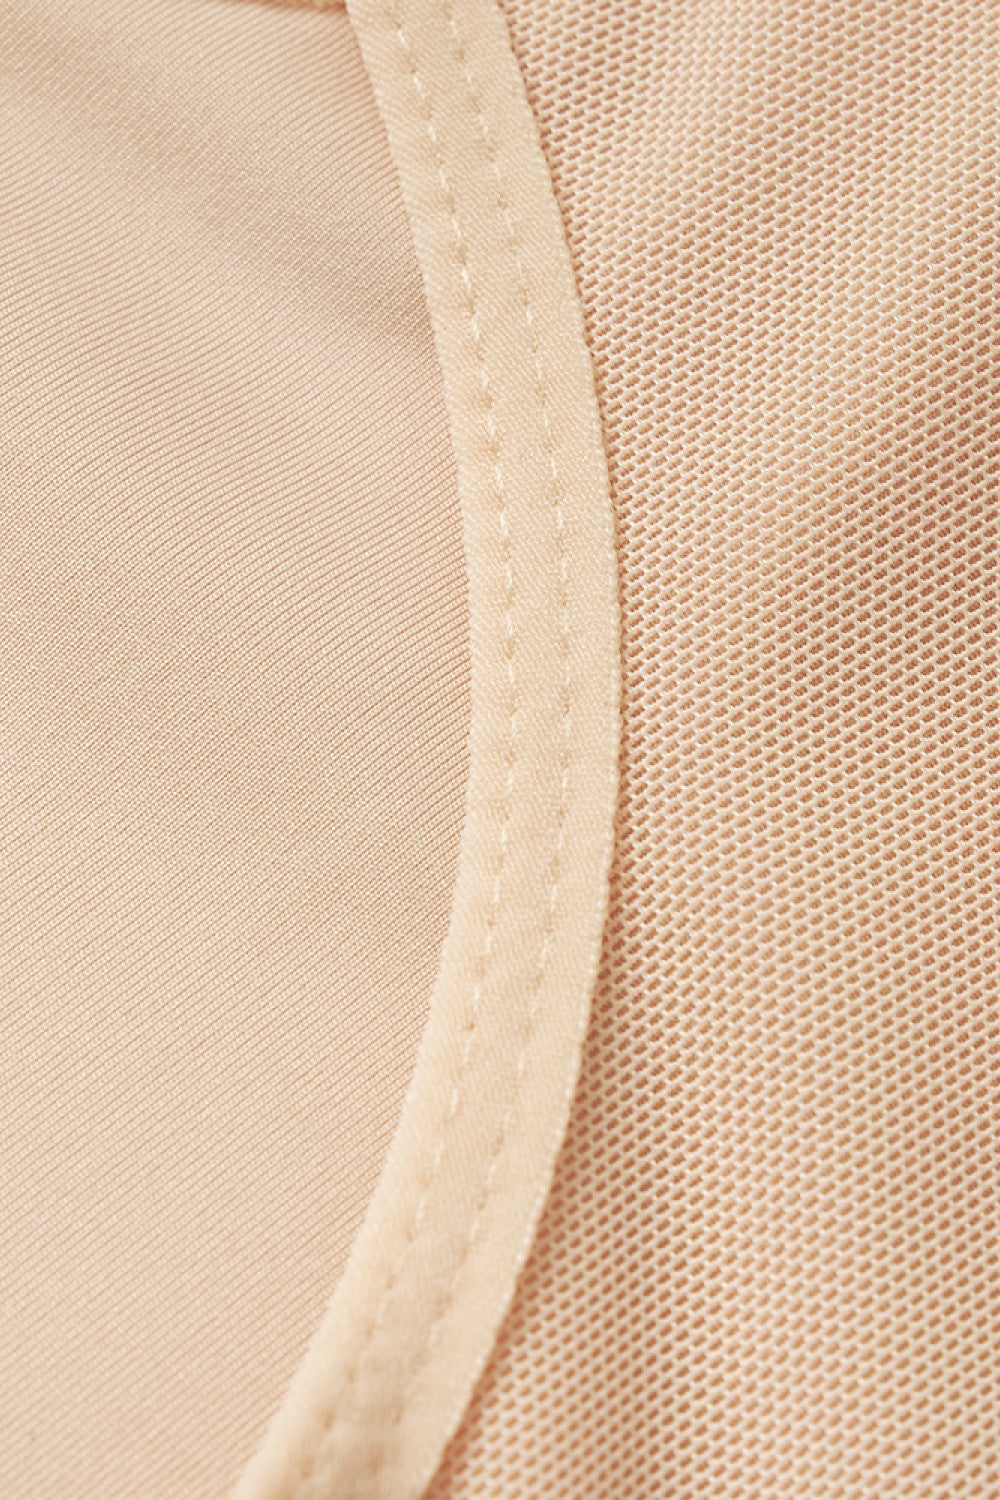 Full Size Side Zipper Under-Bust Shaping Bodysuit - DromedarShop.com Online Boutique